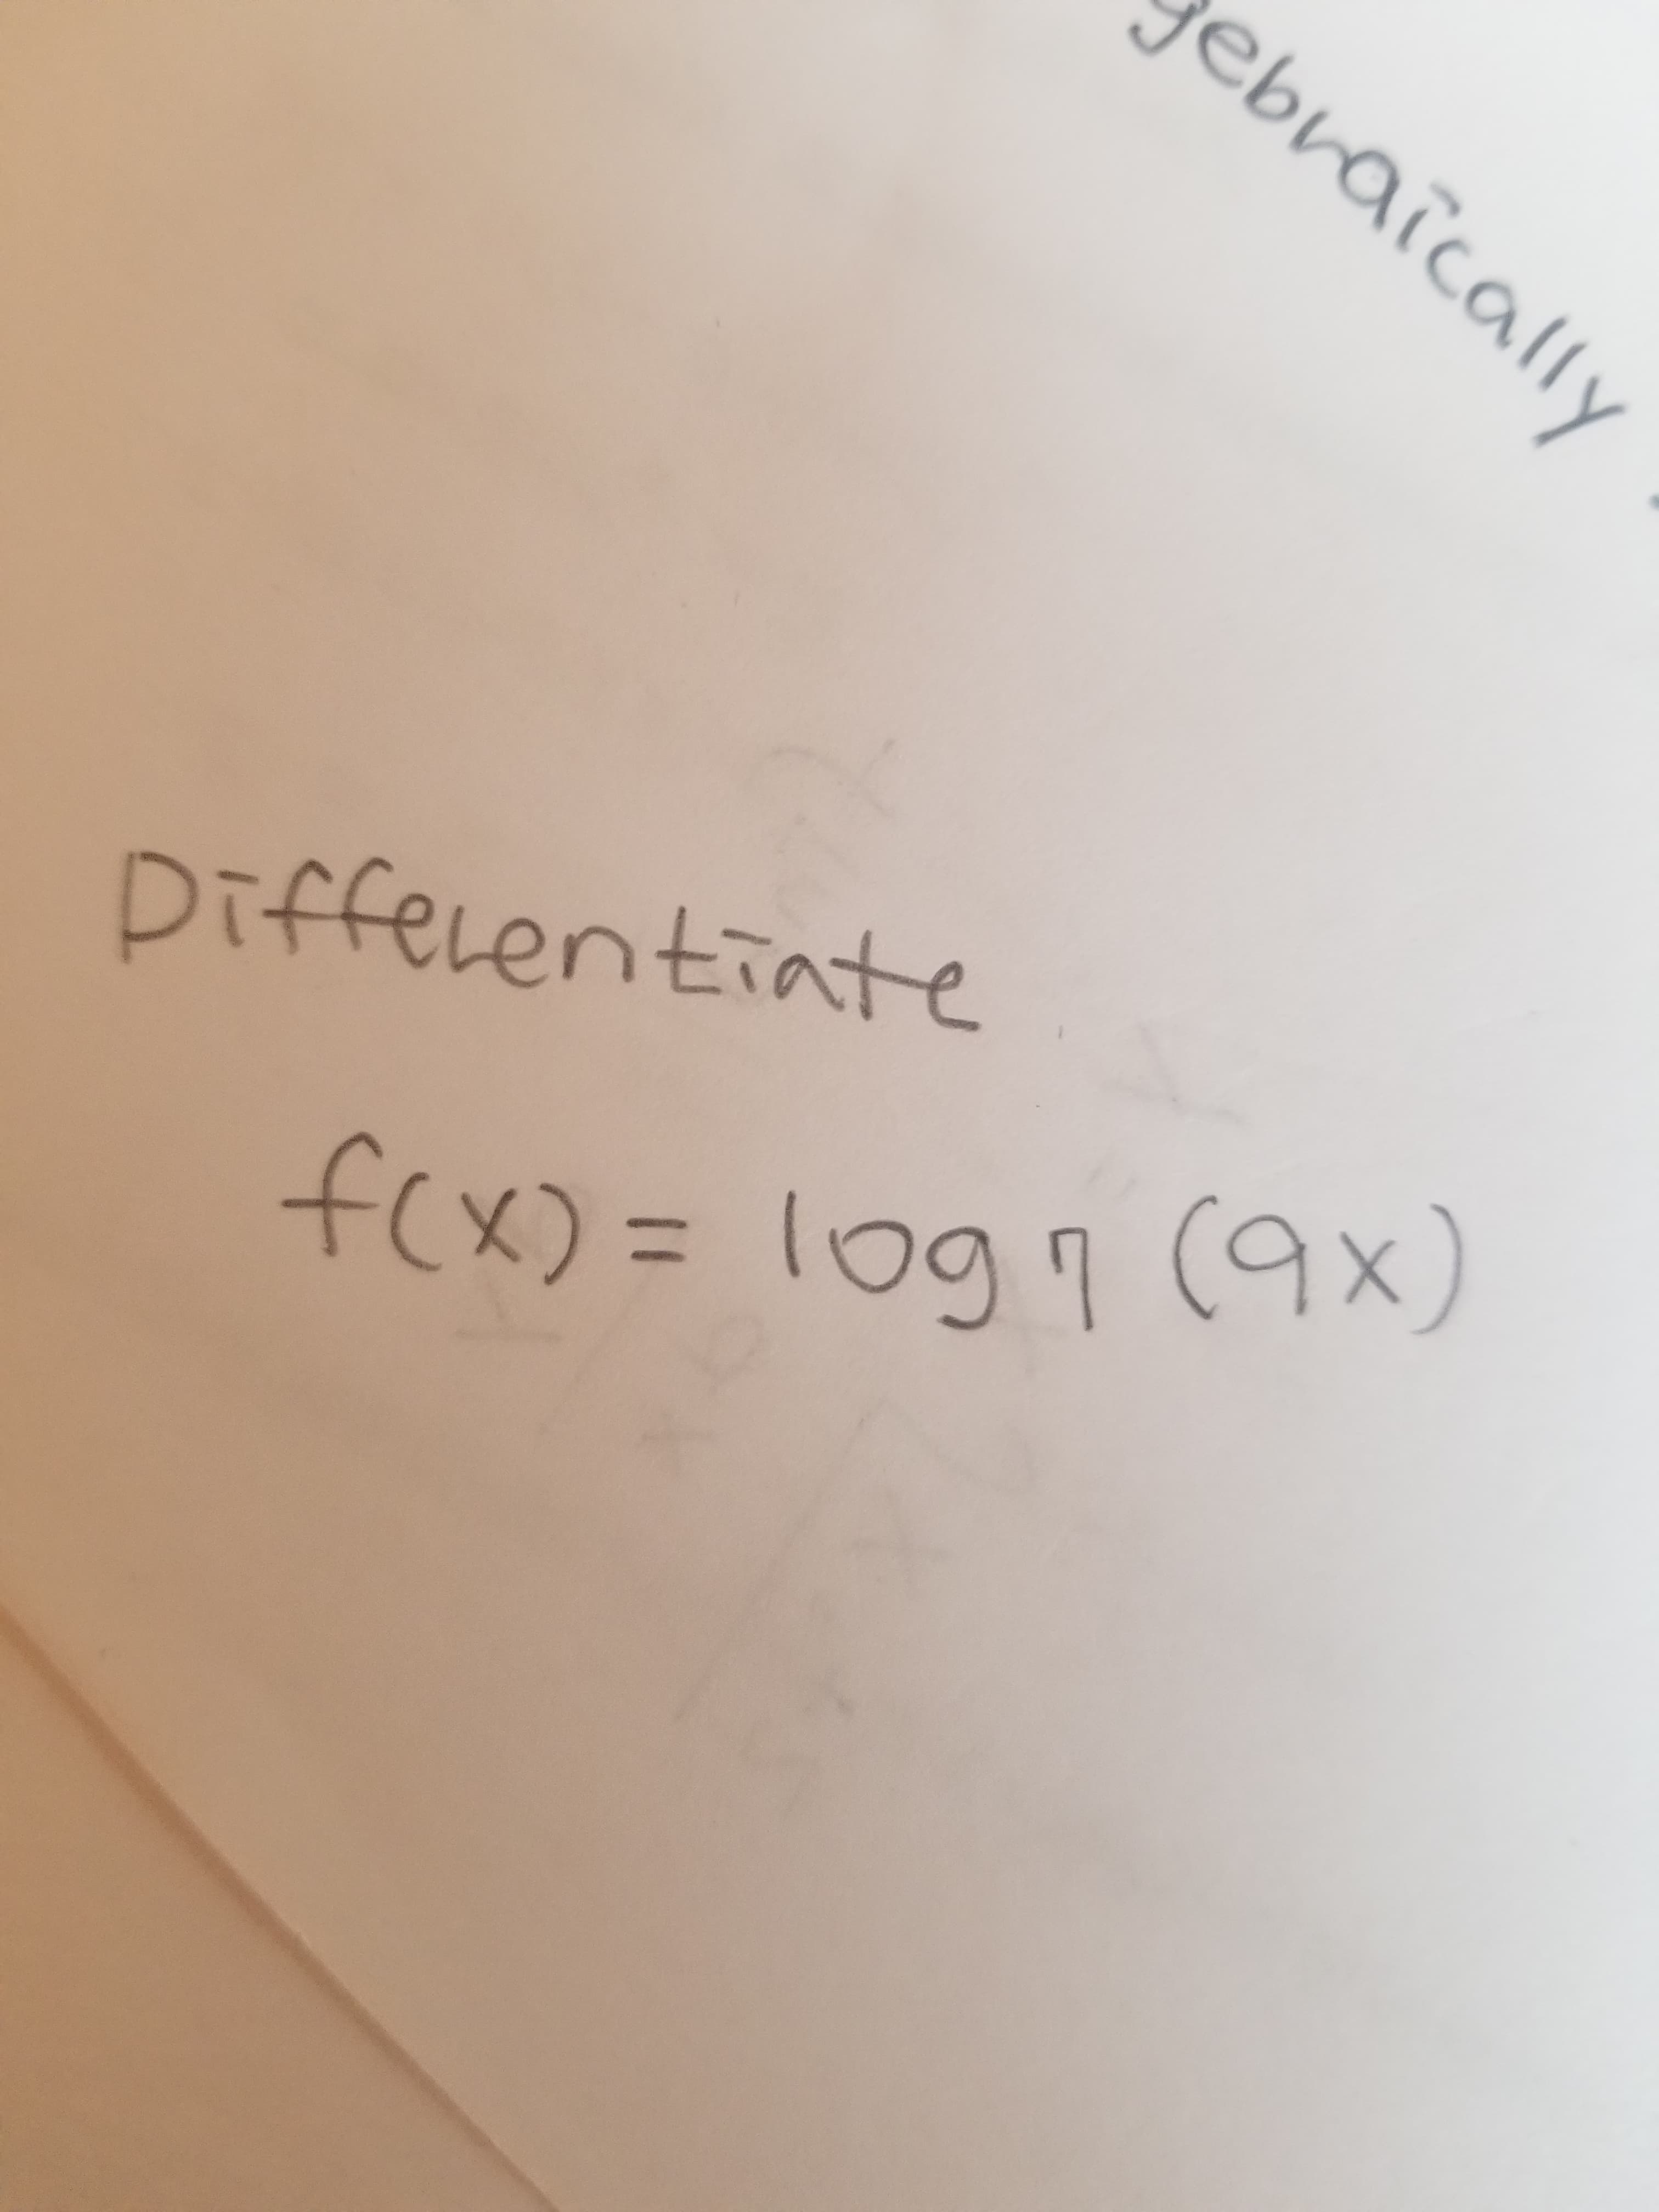 Piffelentiate
f(x) = 1og9 (9x)
